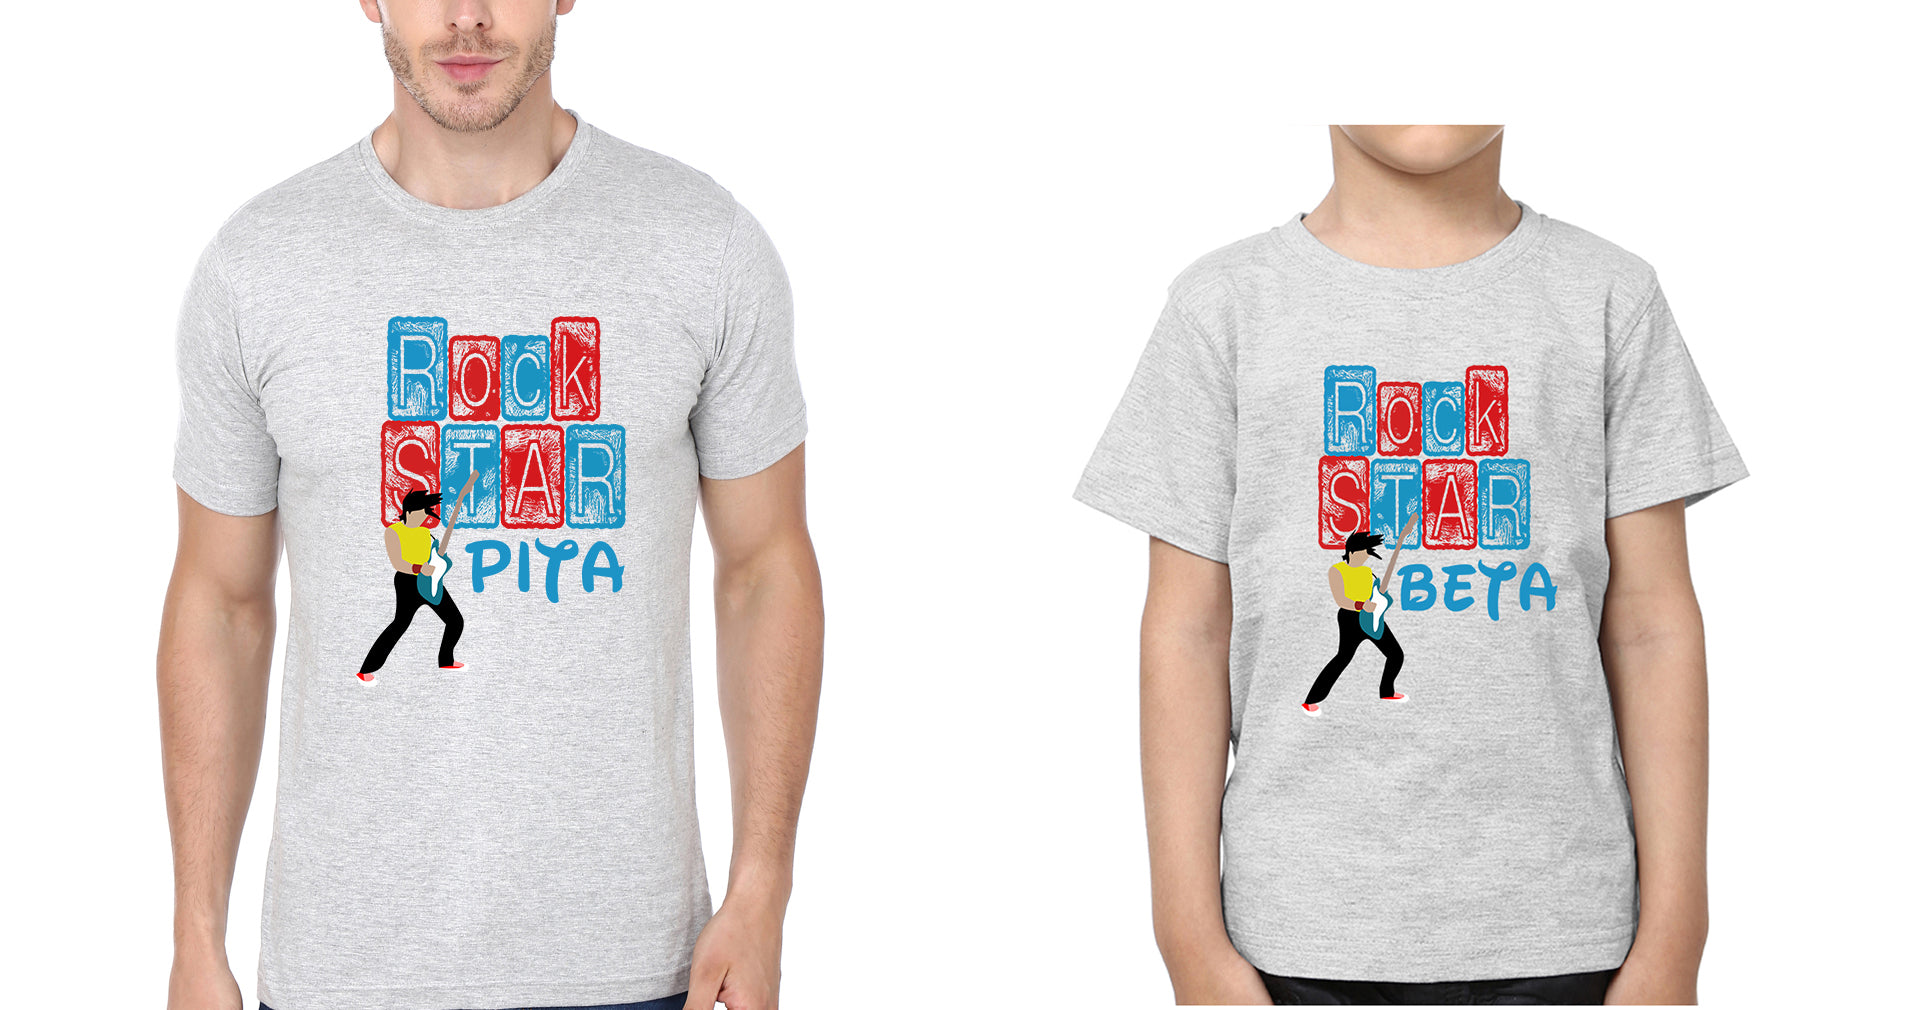 Rockstar Pita Rockstar Beta Father and Son Matching T-Shirt- FunkyTradition